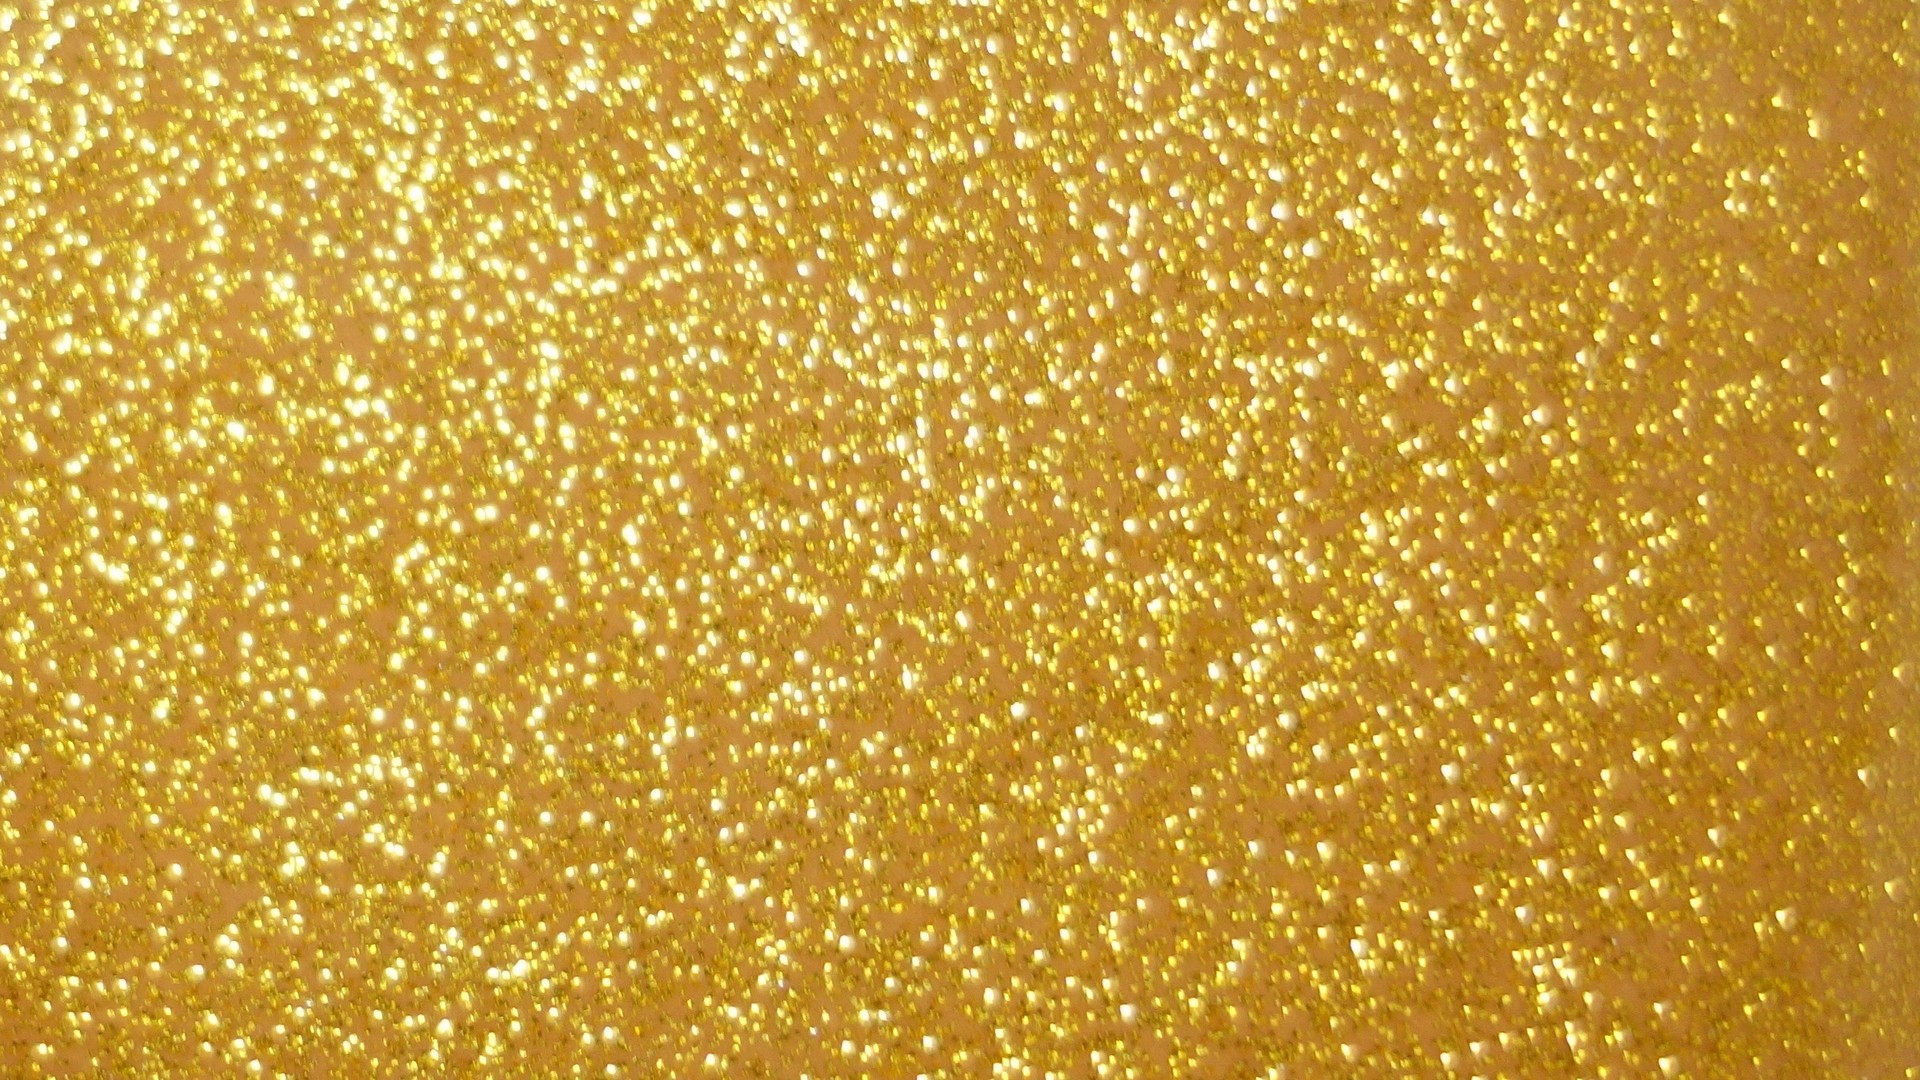 Gold Glitter HD Backgrounds 1920x1080